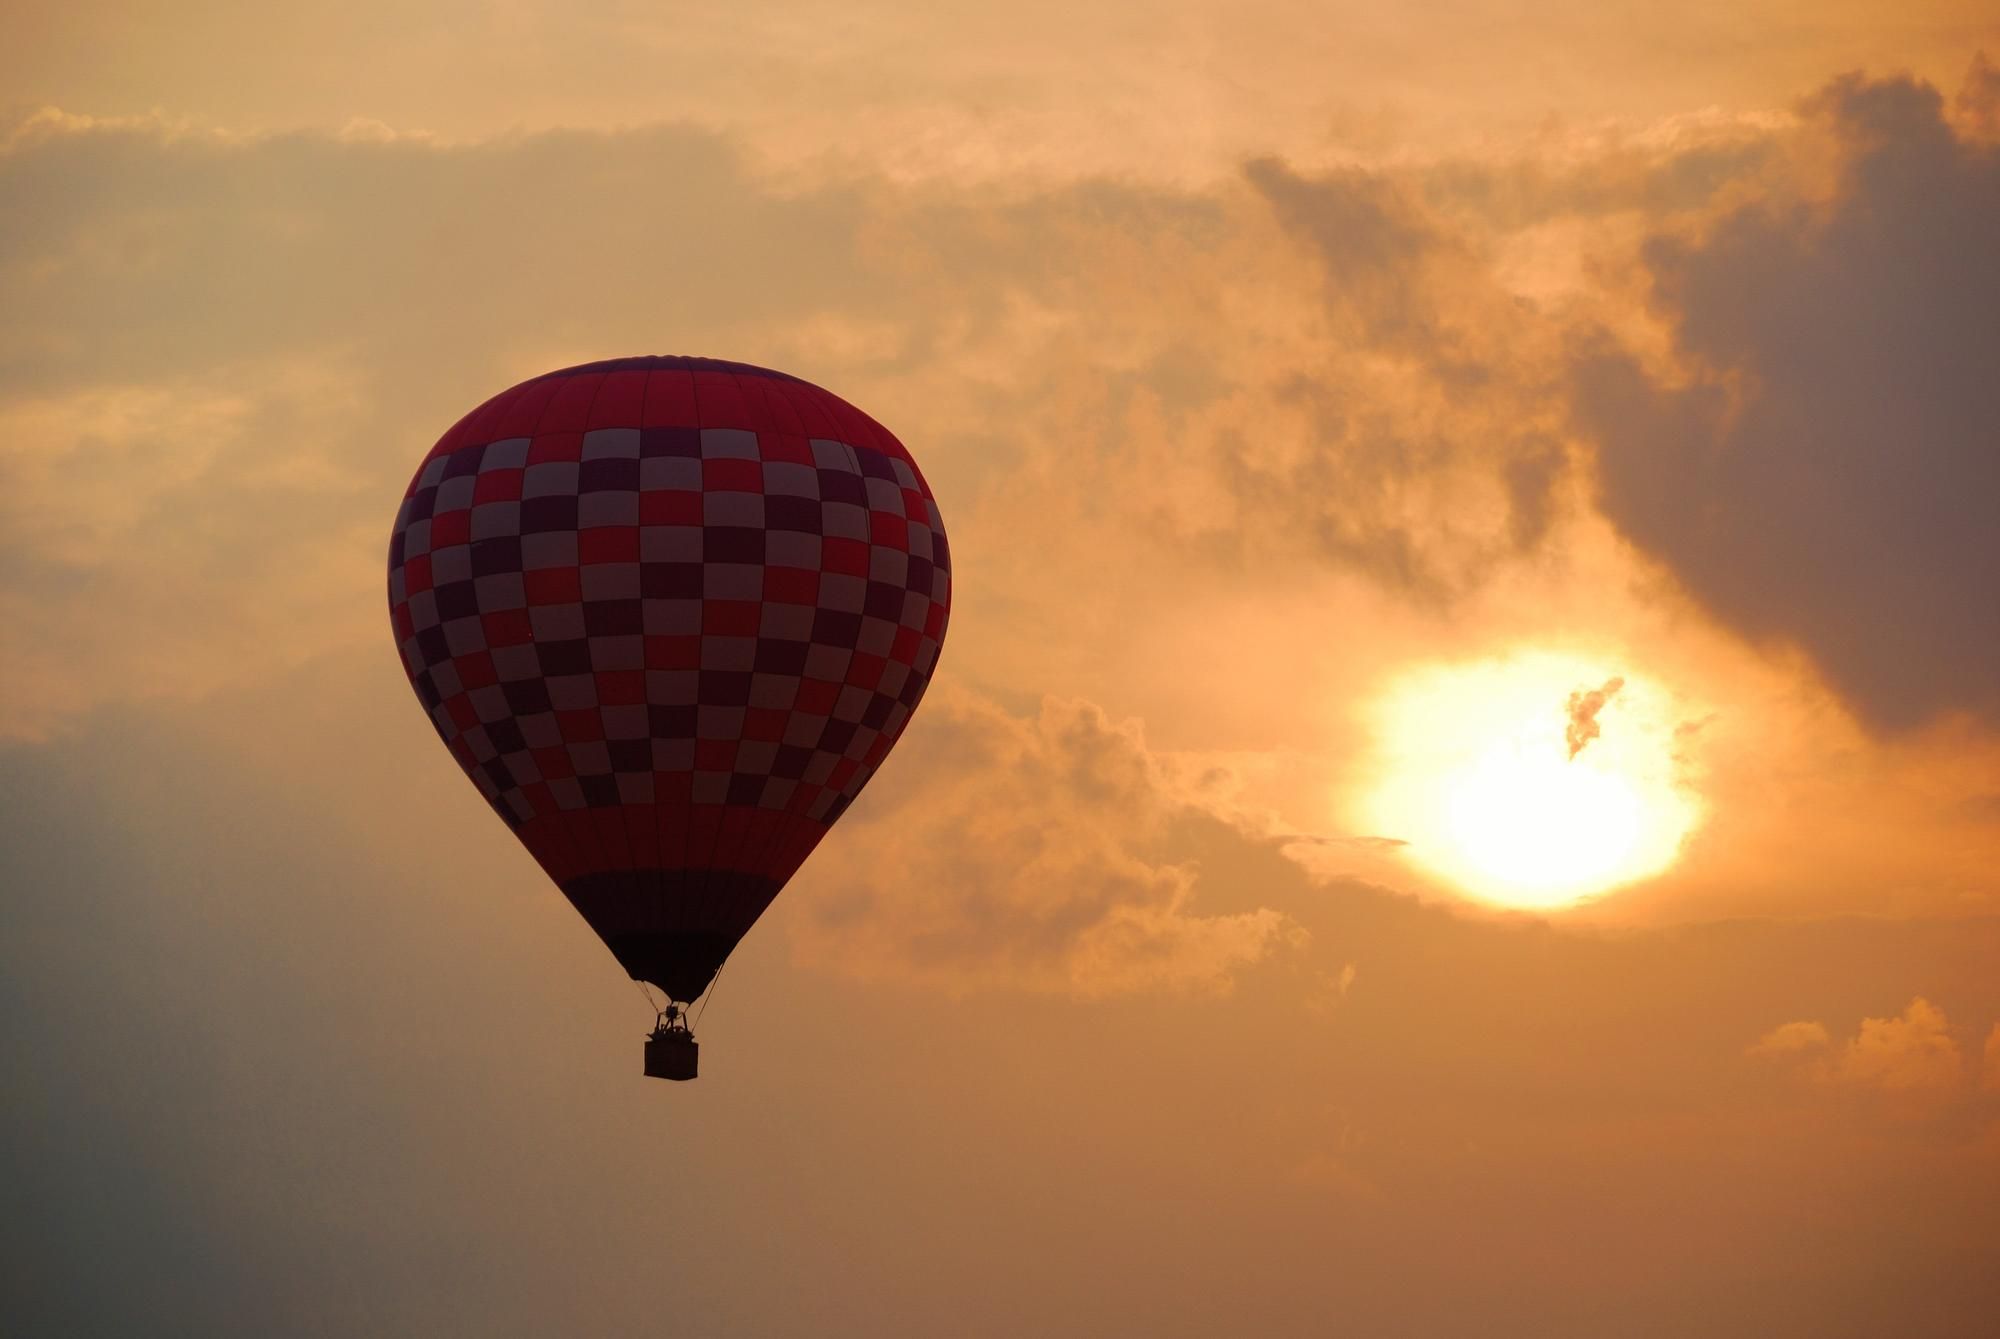 Sunrise seen from a hot air balloon